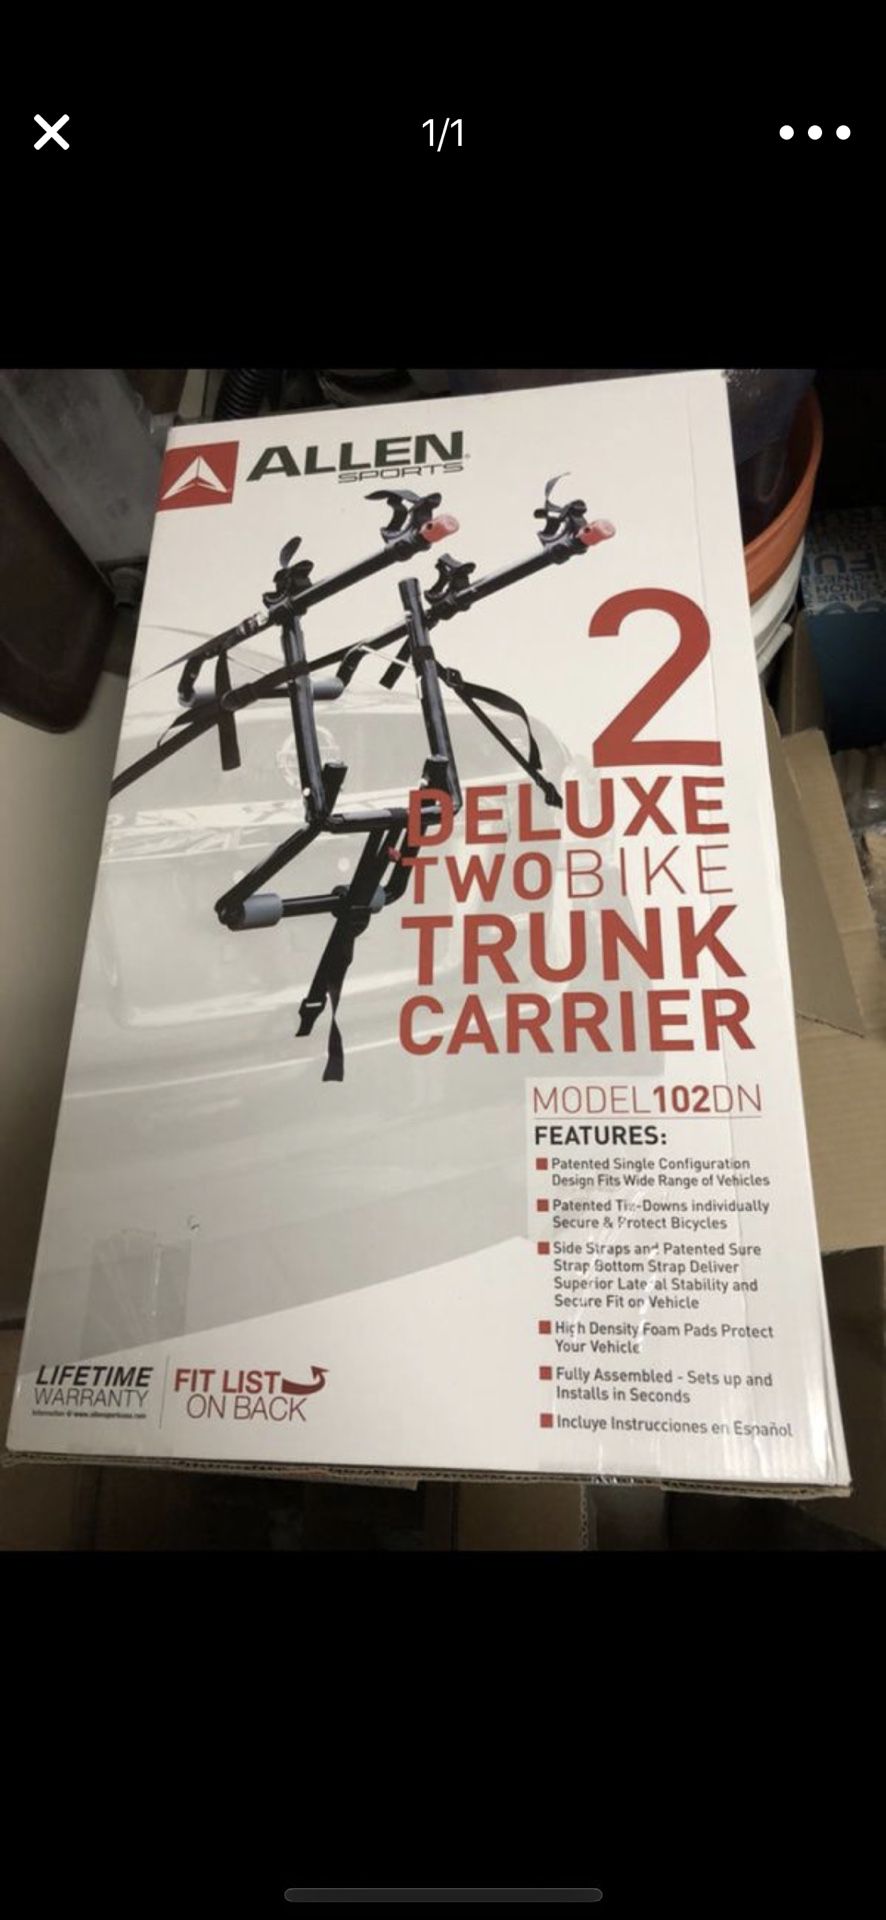 Allen 2 deluxe bike trunk carrier - new in box